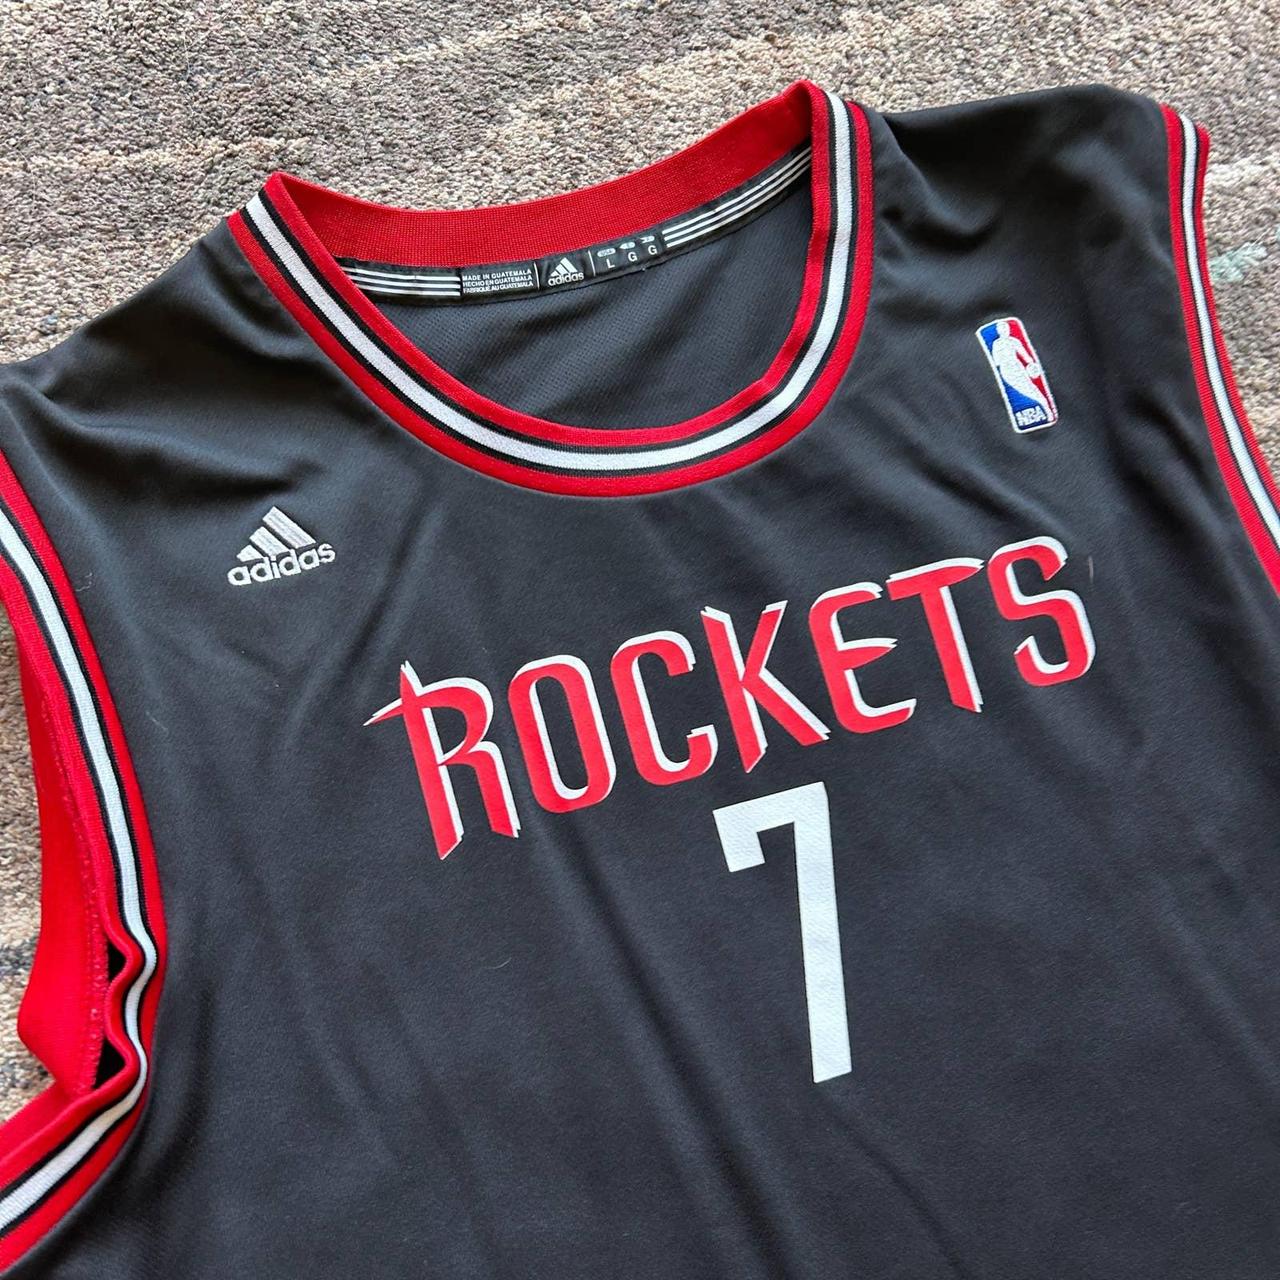 Adidas Houston Rockets Jeremy Lin Jersey Size Large